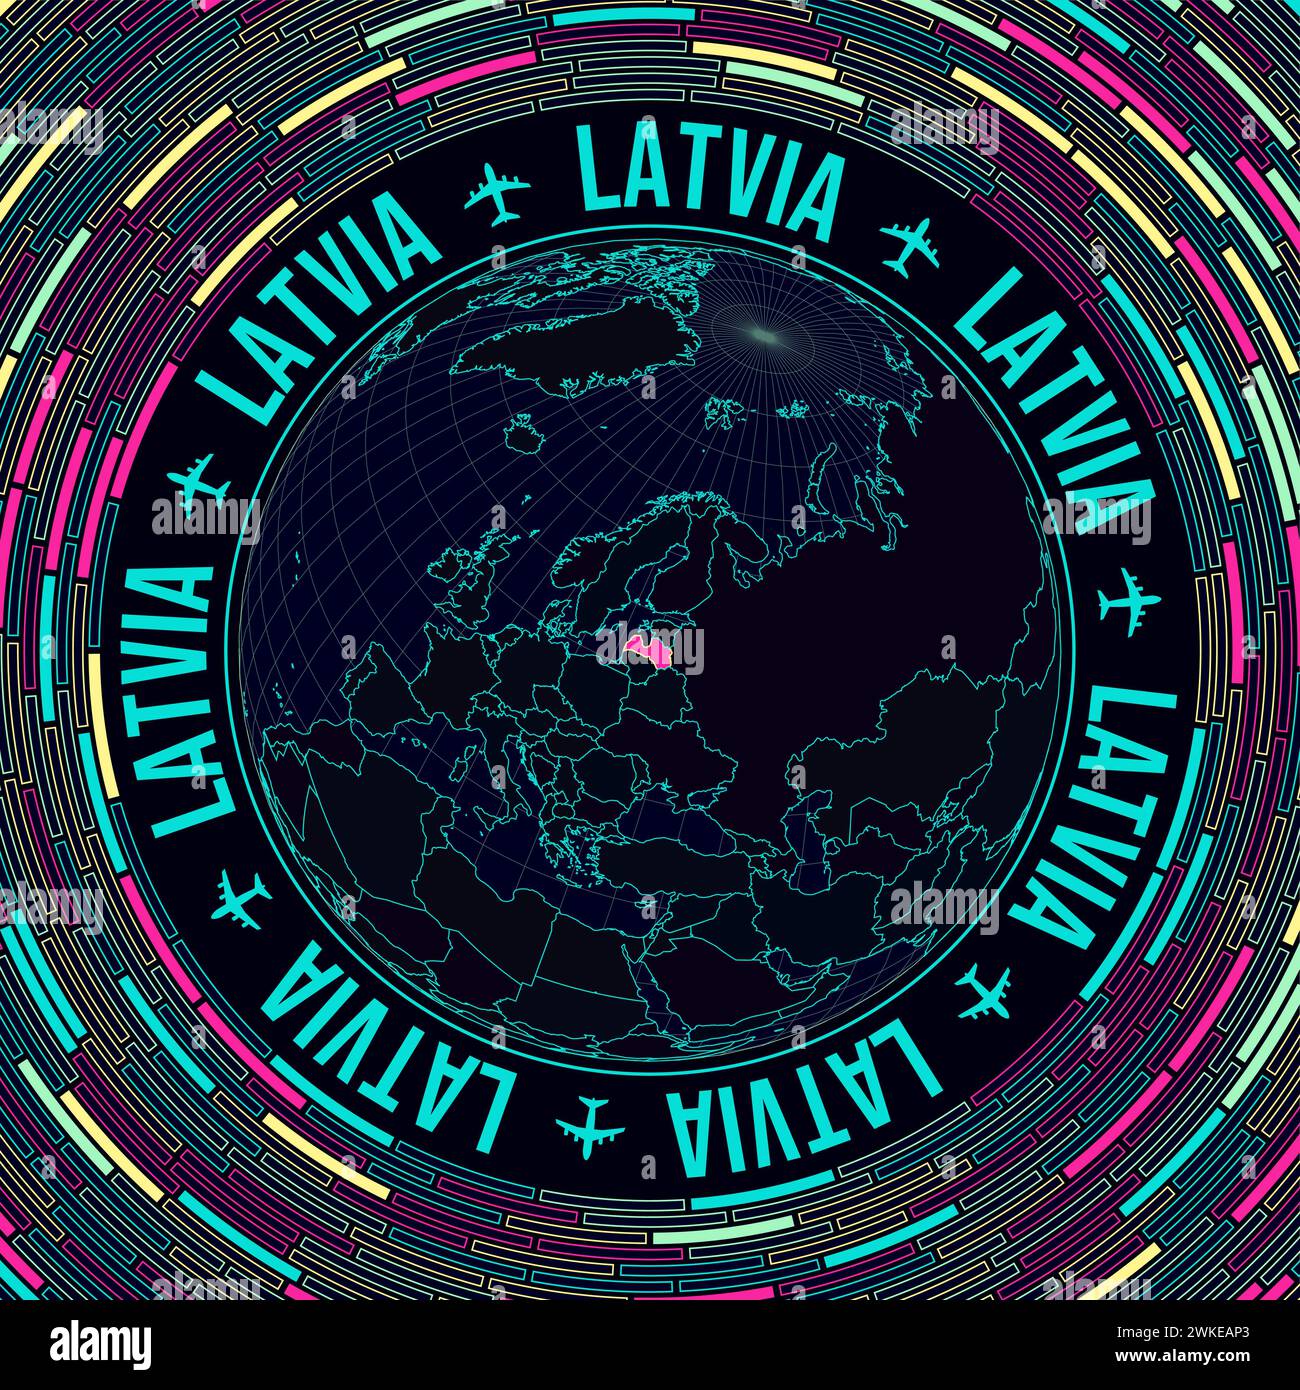 Latvia on globe. Satelite view of the world centered to Latvia. Bright neon style. Futuristic radial bricks background. Classy vector illustration. Stock Vector